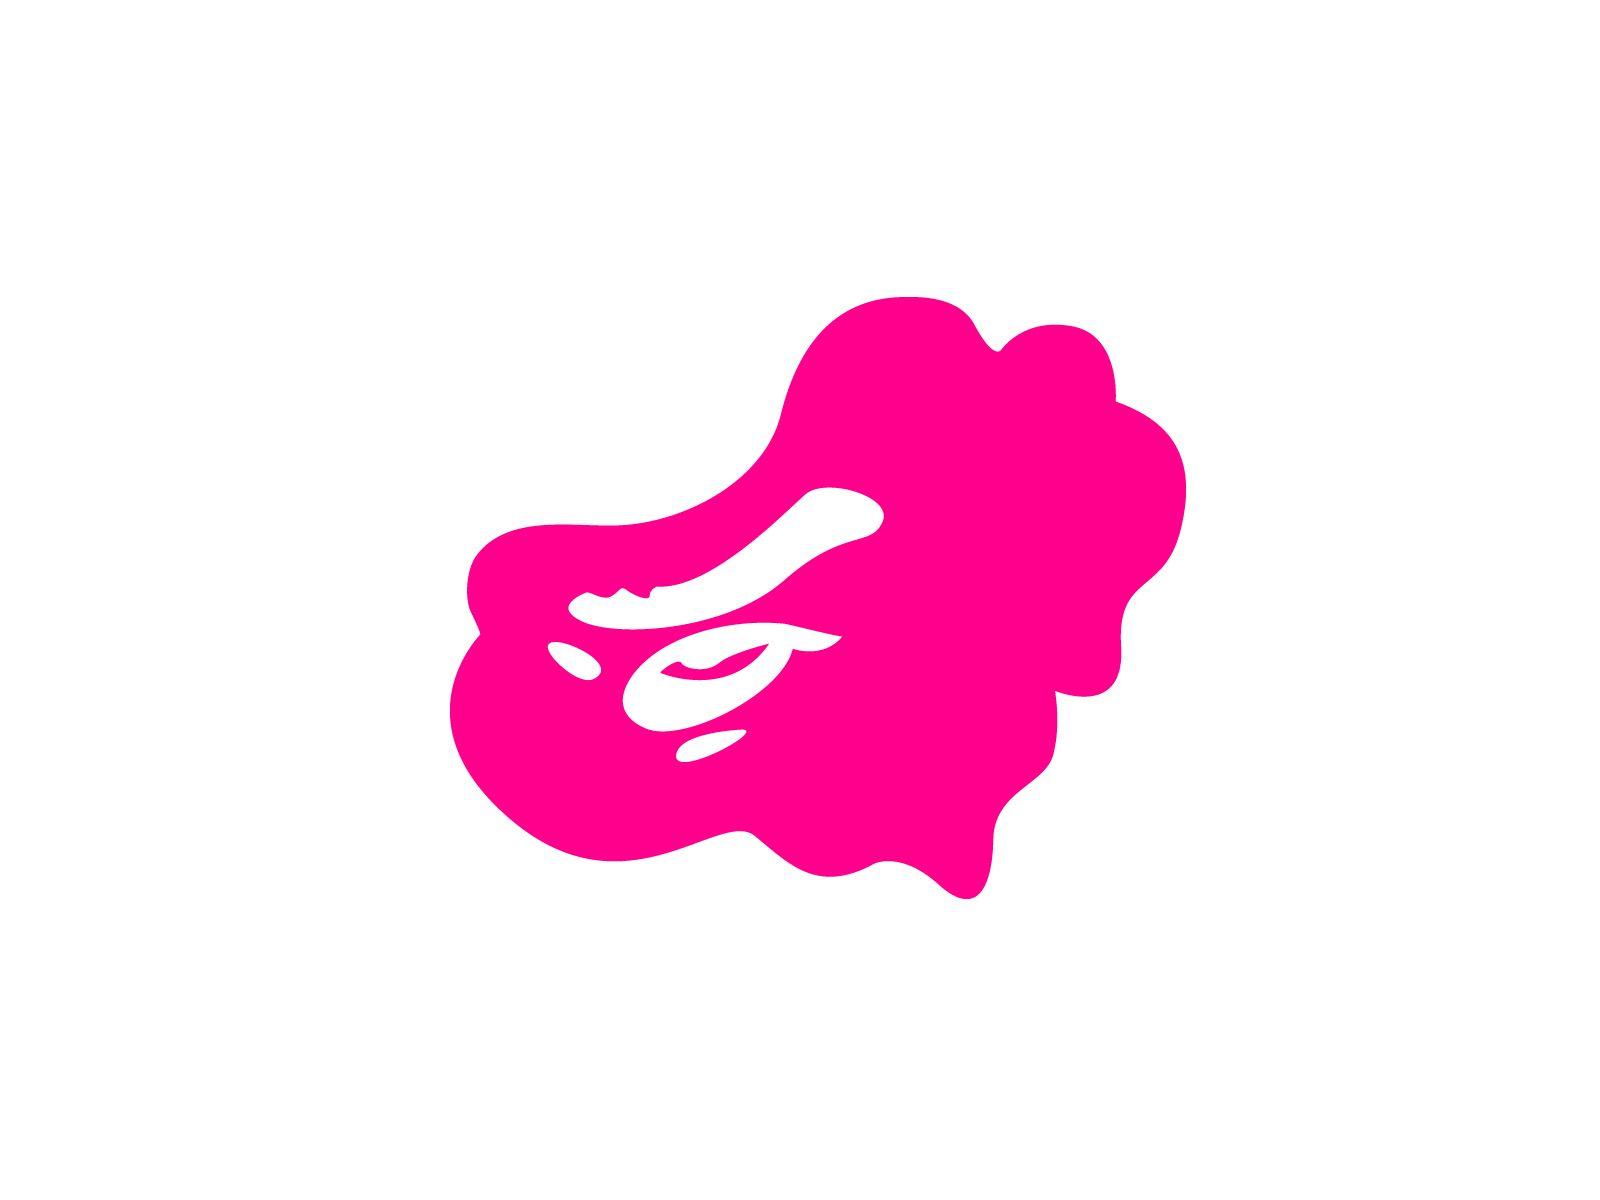 Pink BAPE Logo - Download the Cloud Camo Bape Wallpaper, Cloud Camo Bape iPhone